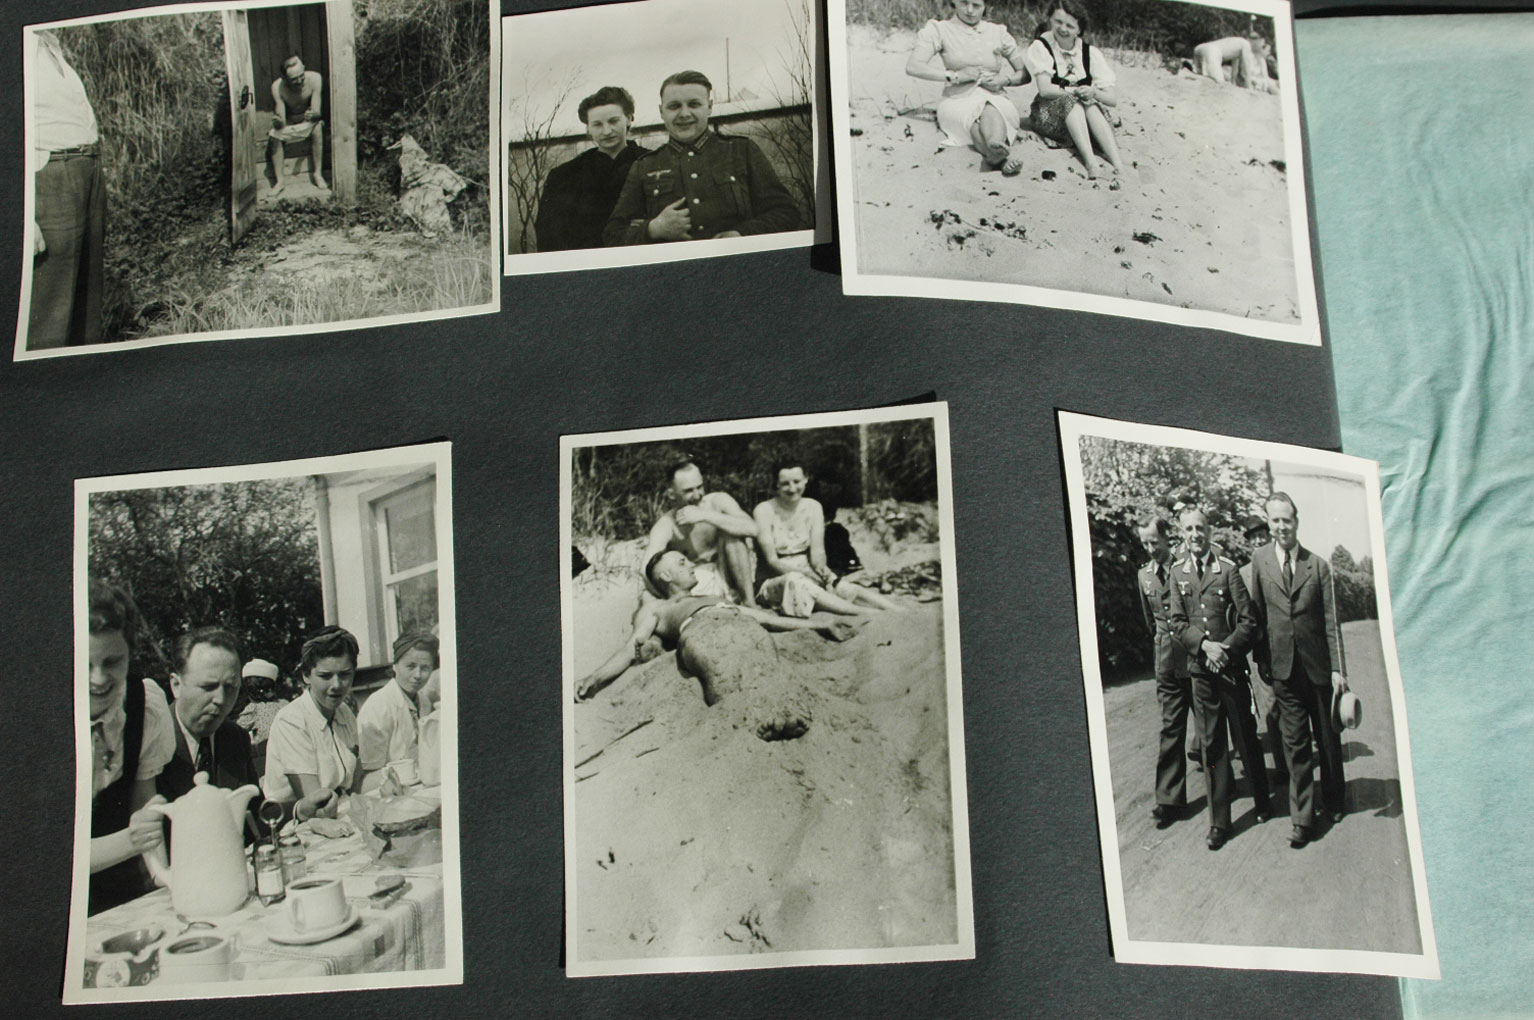 Luftwaffe Photo Album with photos of Anton Mussert (Dutch Nazi Party Leader)